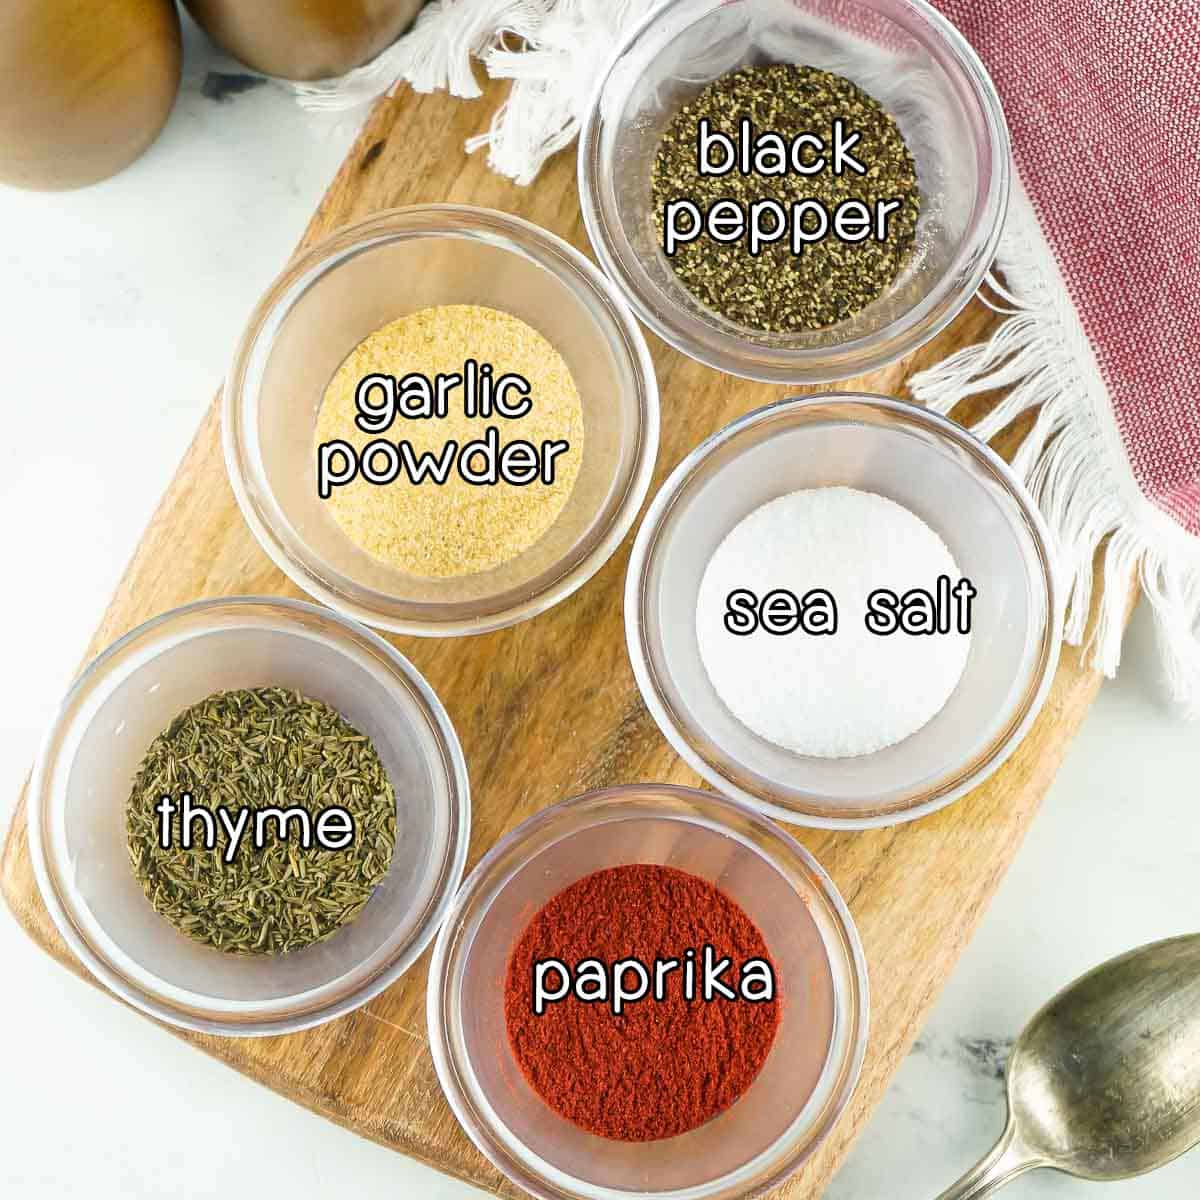 Overhead shot of ingredients - garlic powder, black pepper, sea salt, thyme, and paprika.